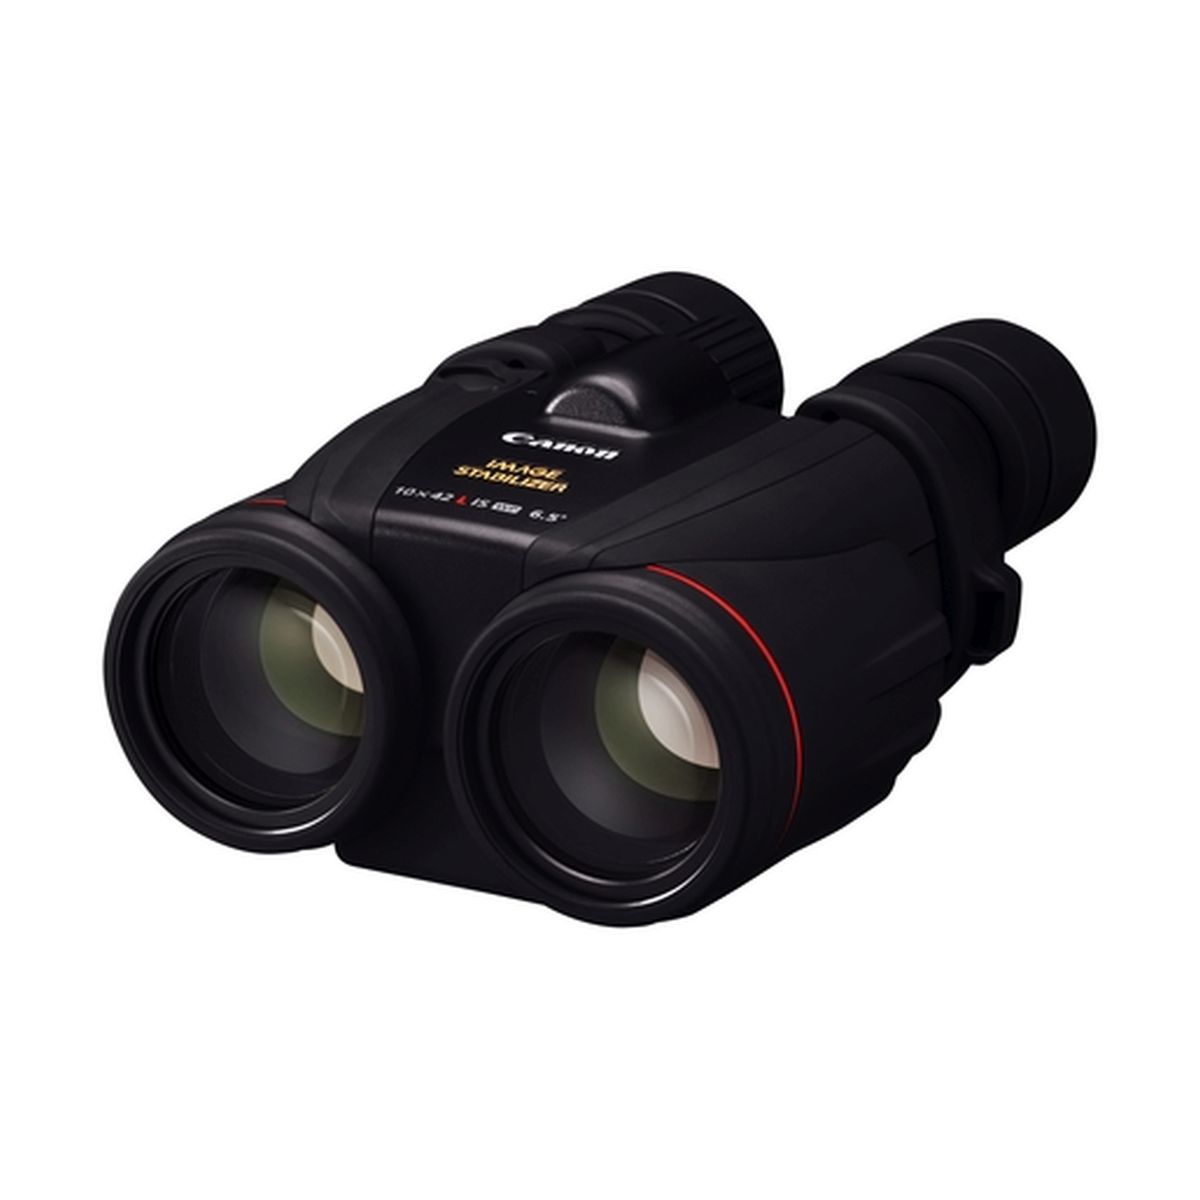 Canon Binocular 10x42 L IS WP